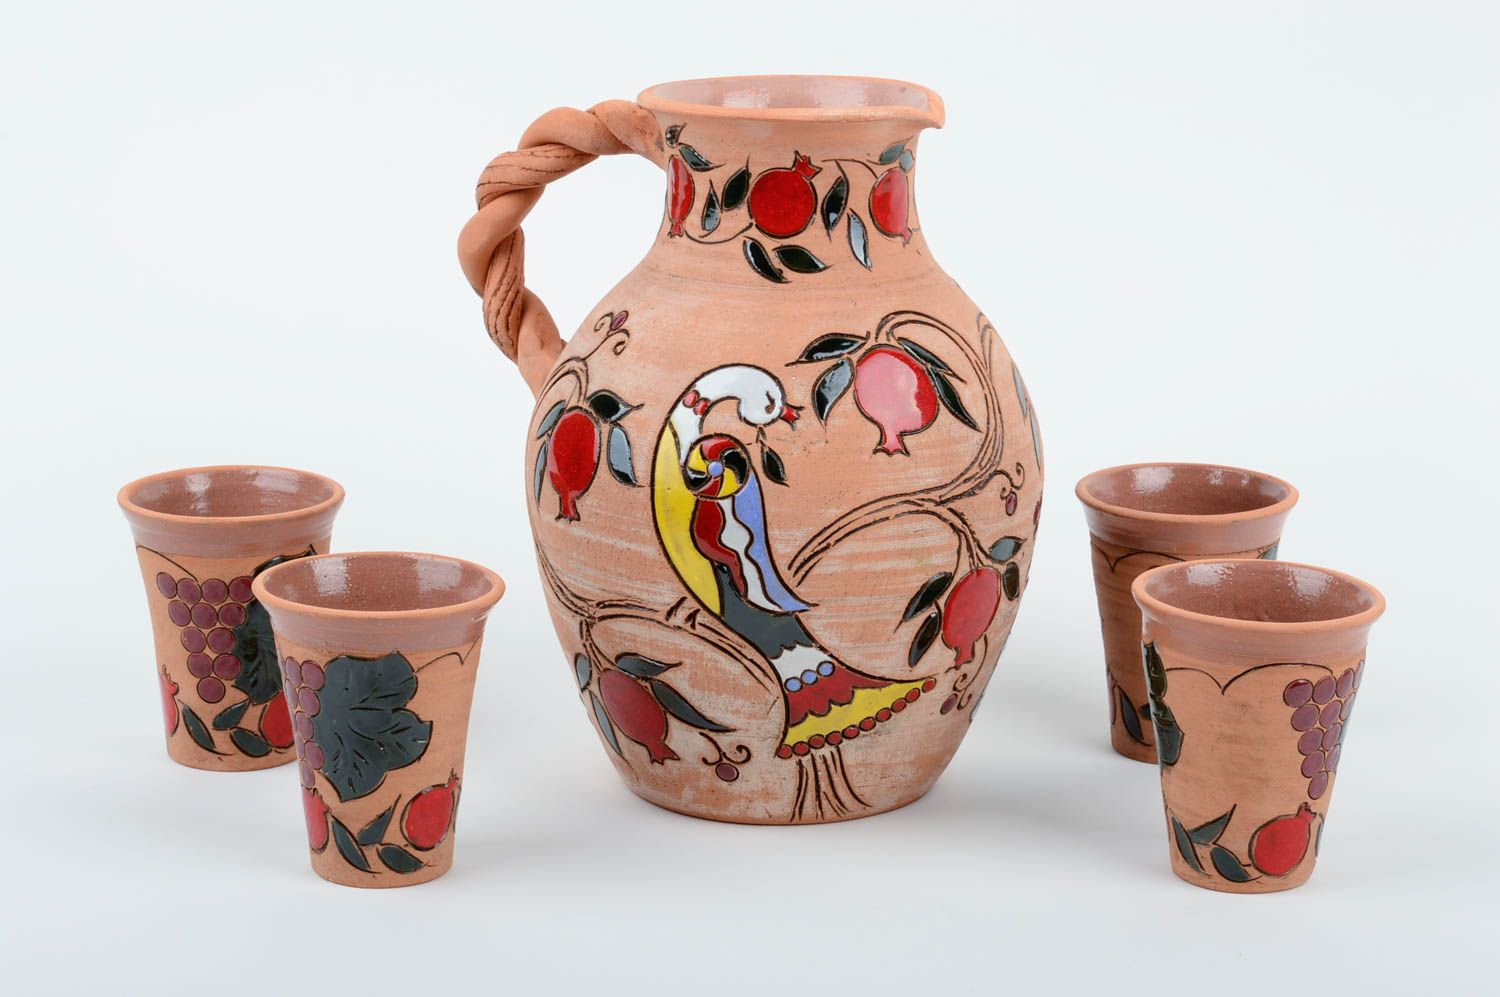 60 oz ceramic wine pitcher with 4 wine cups 3,8 lb photo 1